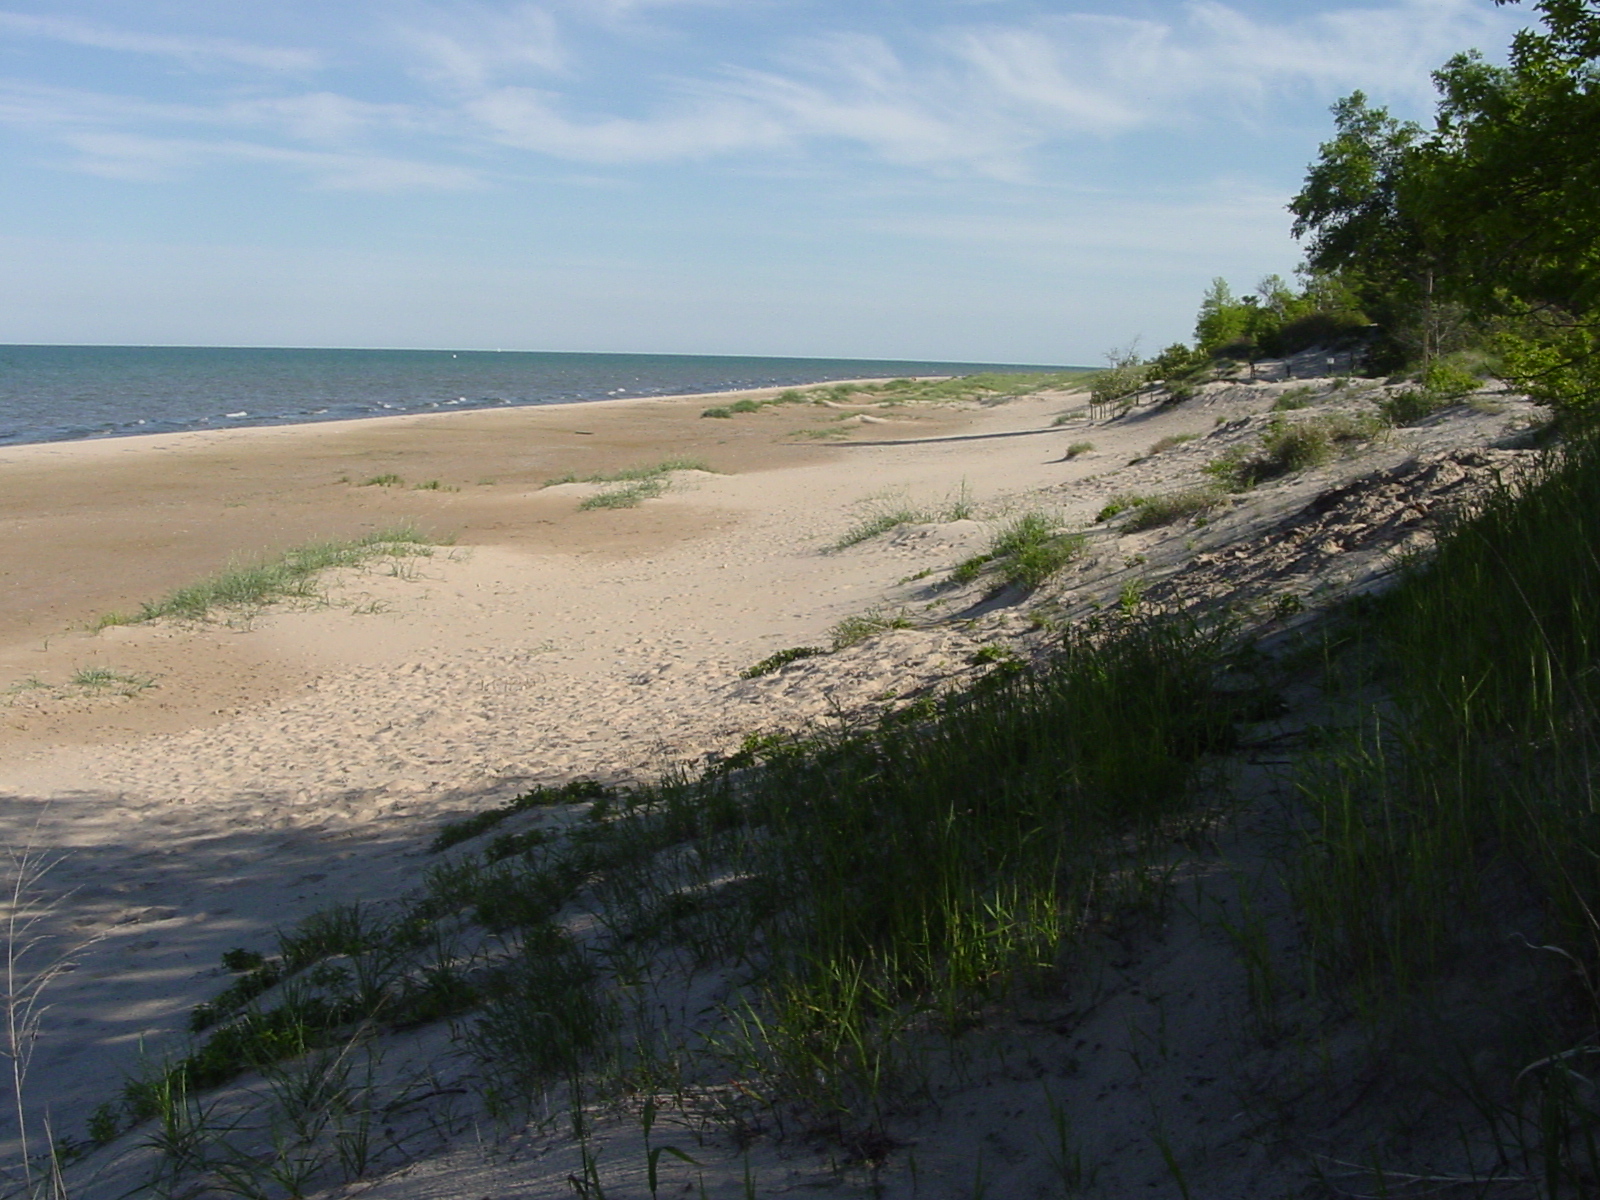 For a short time, the trail follows a beach along the Lake Michigan Shore.